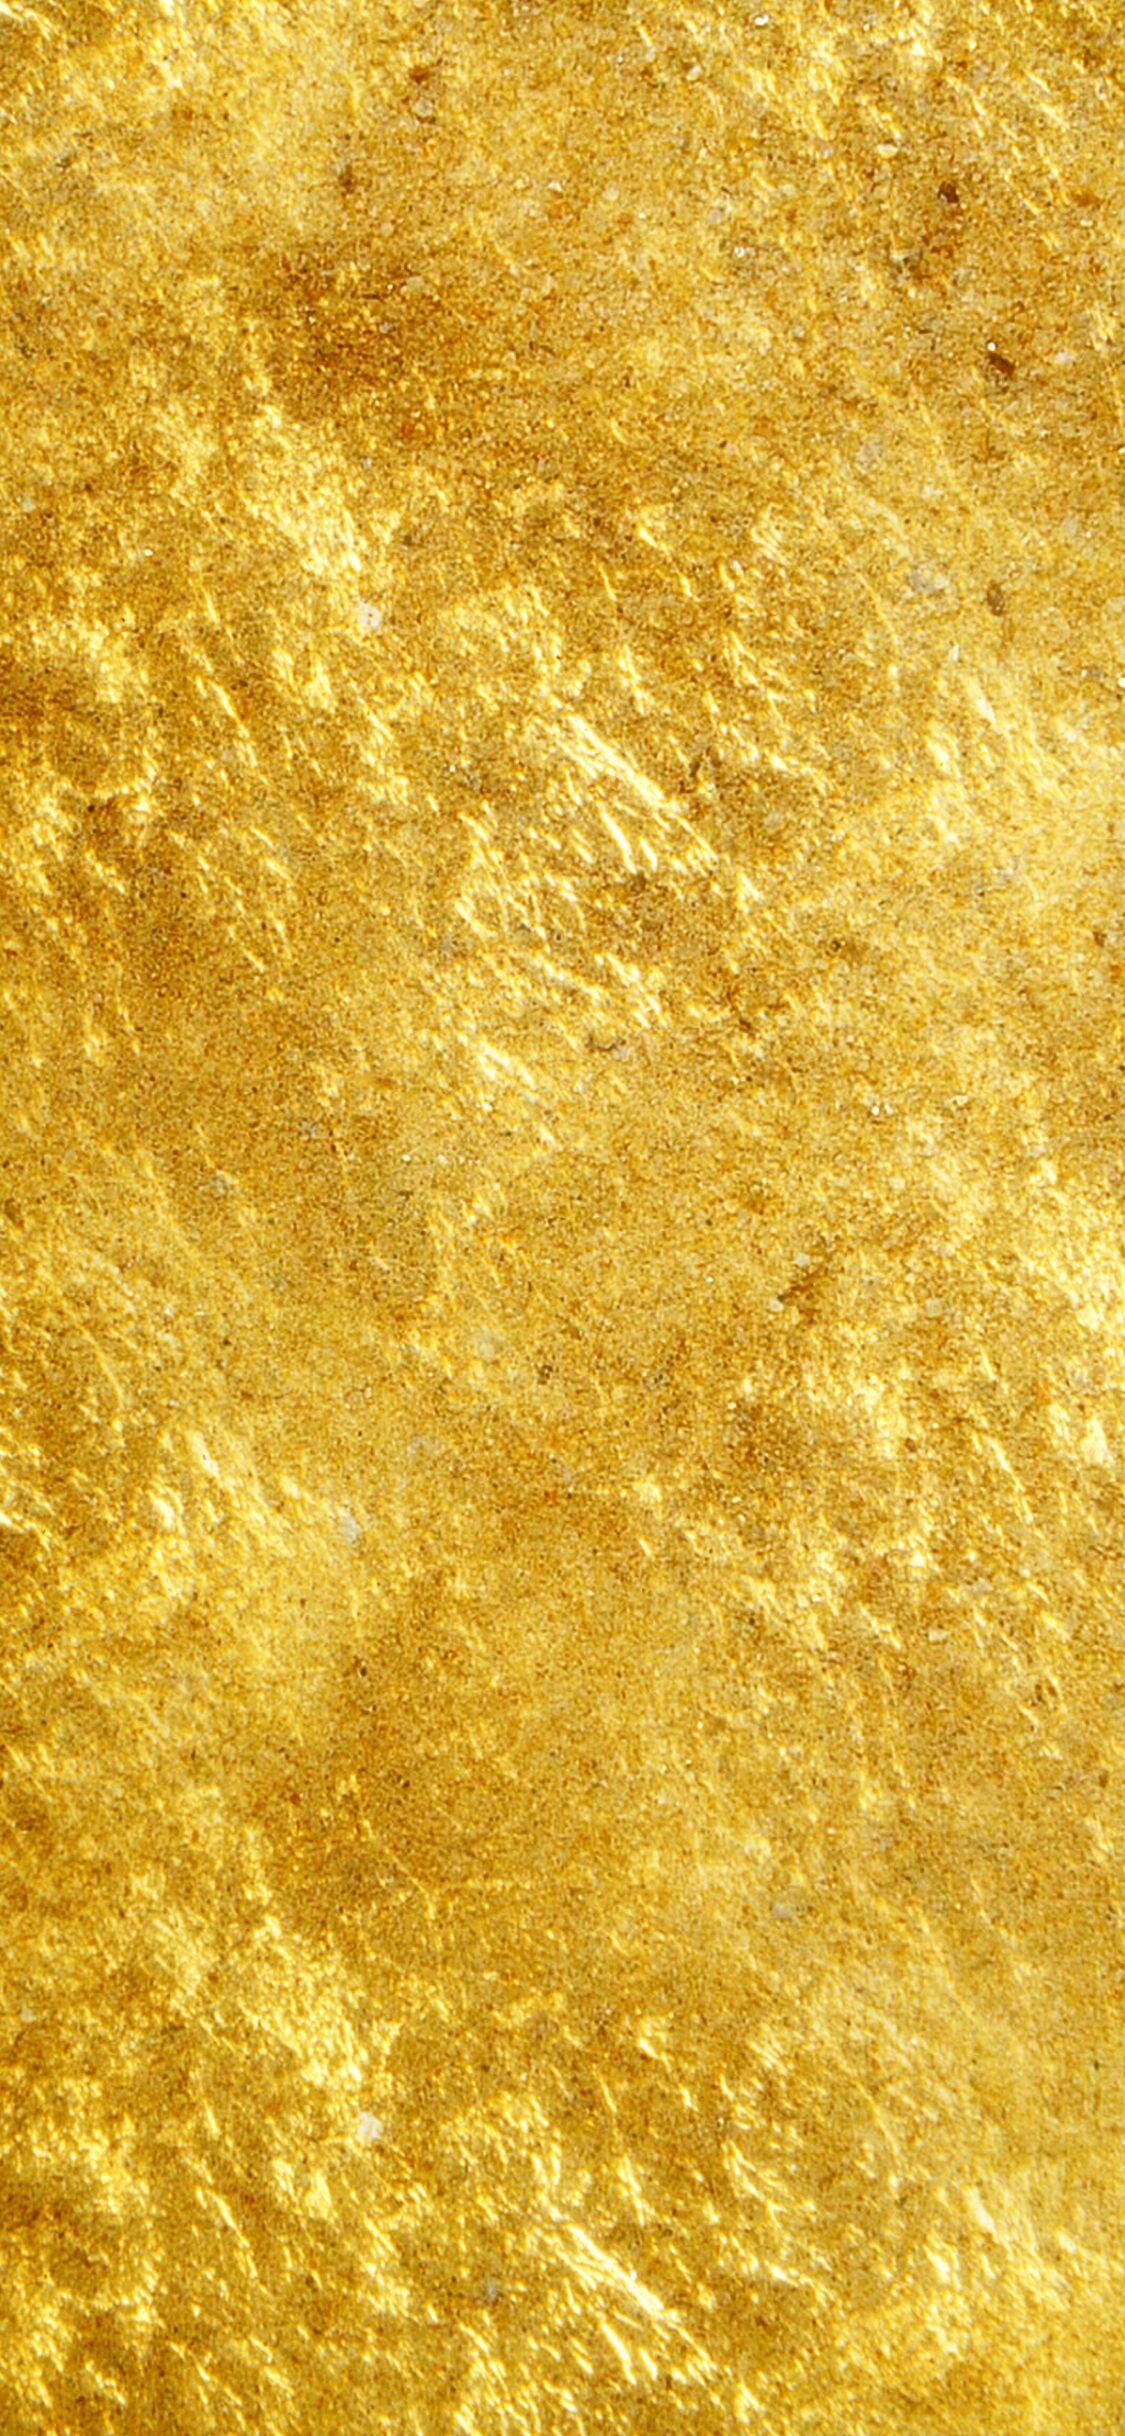 Gold Foil: Metalized paper, Chaotic pattern. 1130x2440 HD Wallpaper.